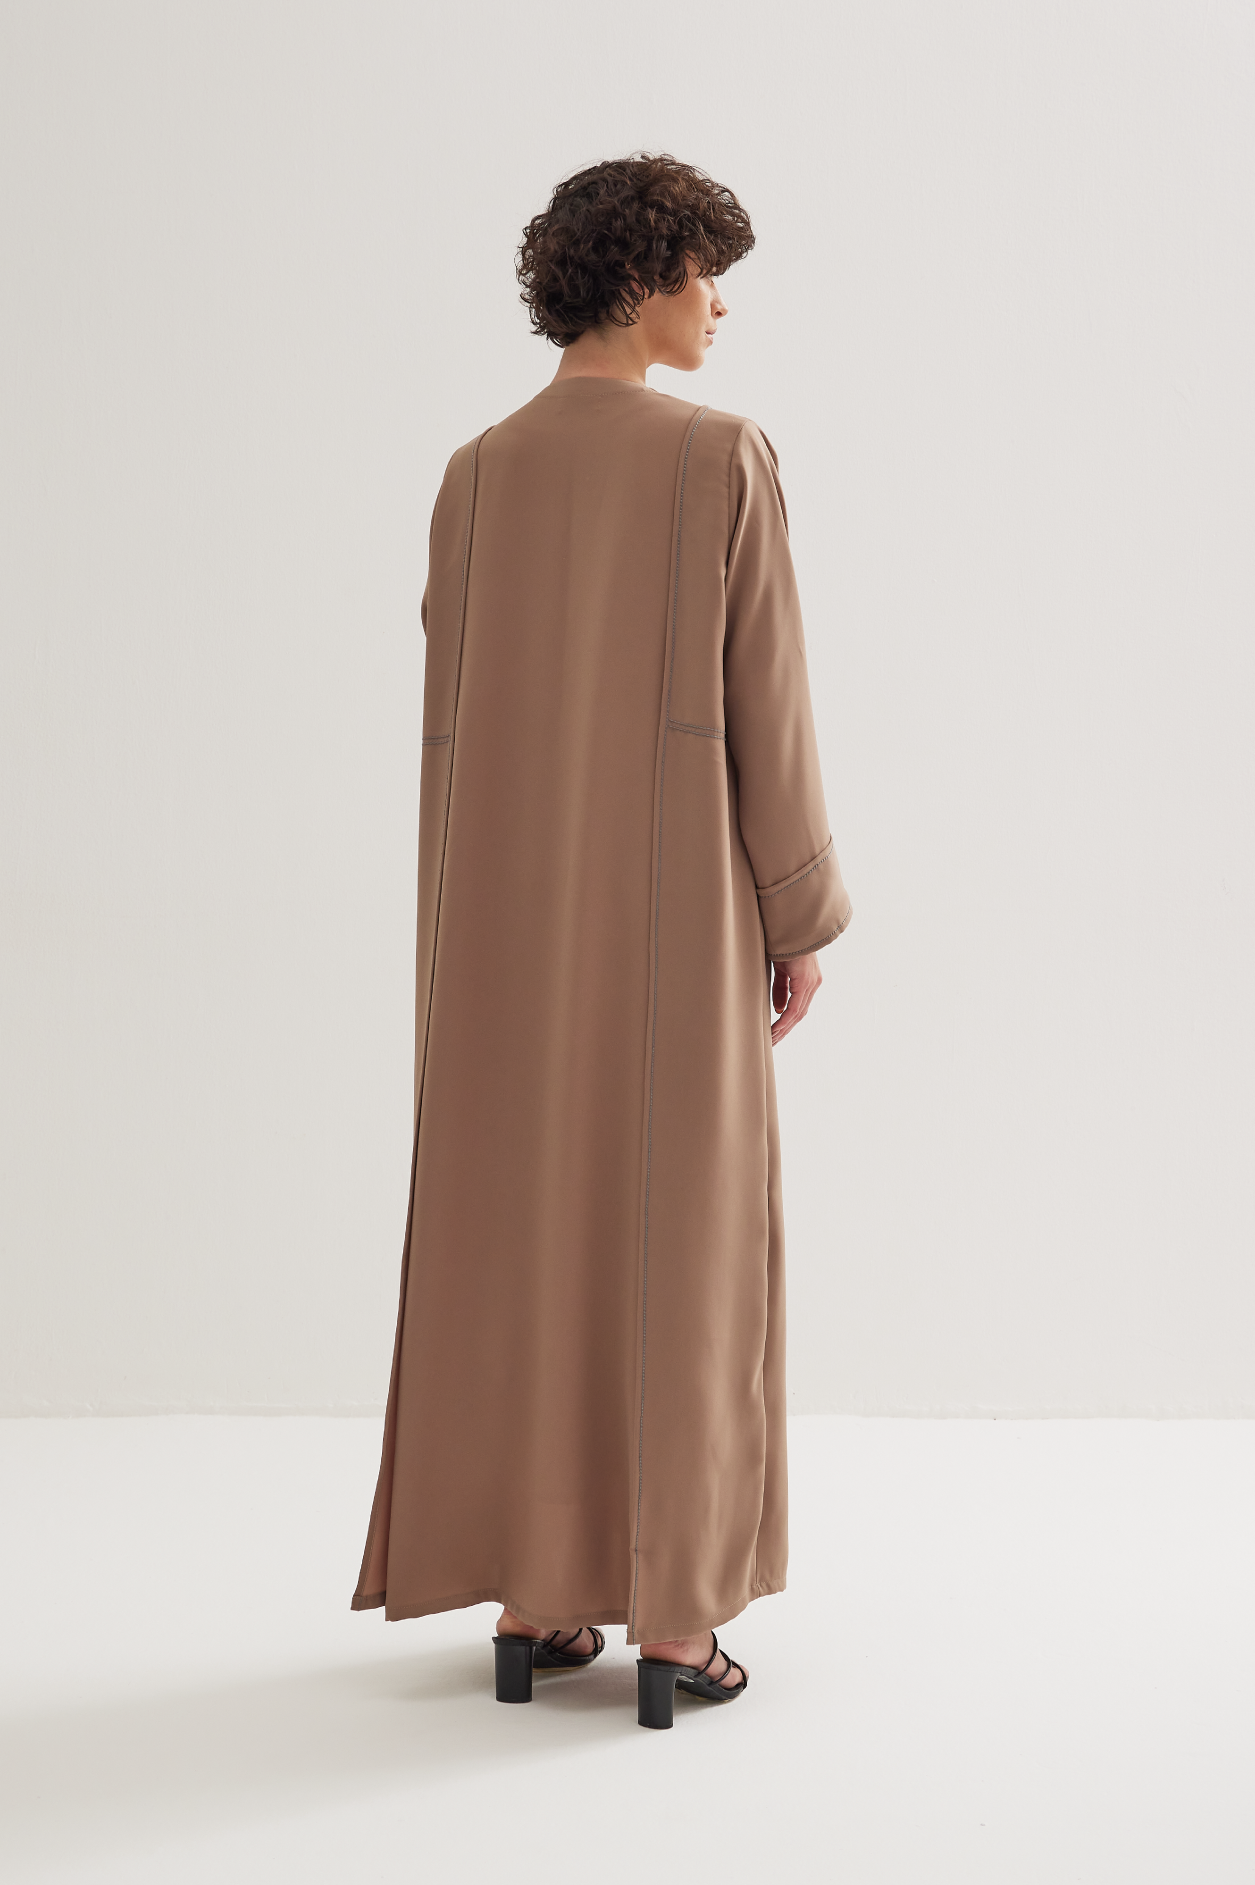 Panel Abaya in Camel Beige